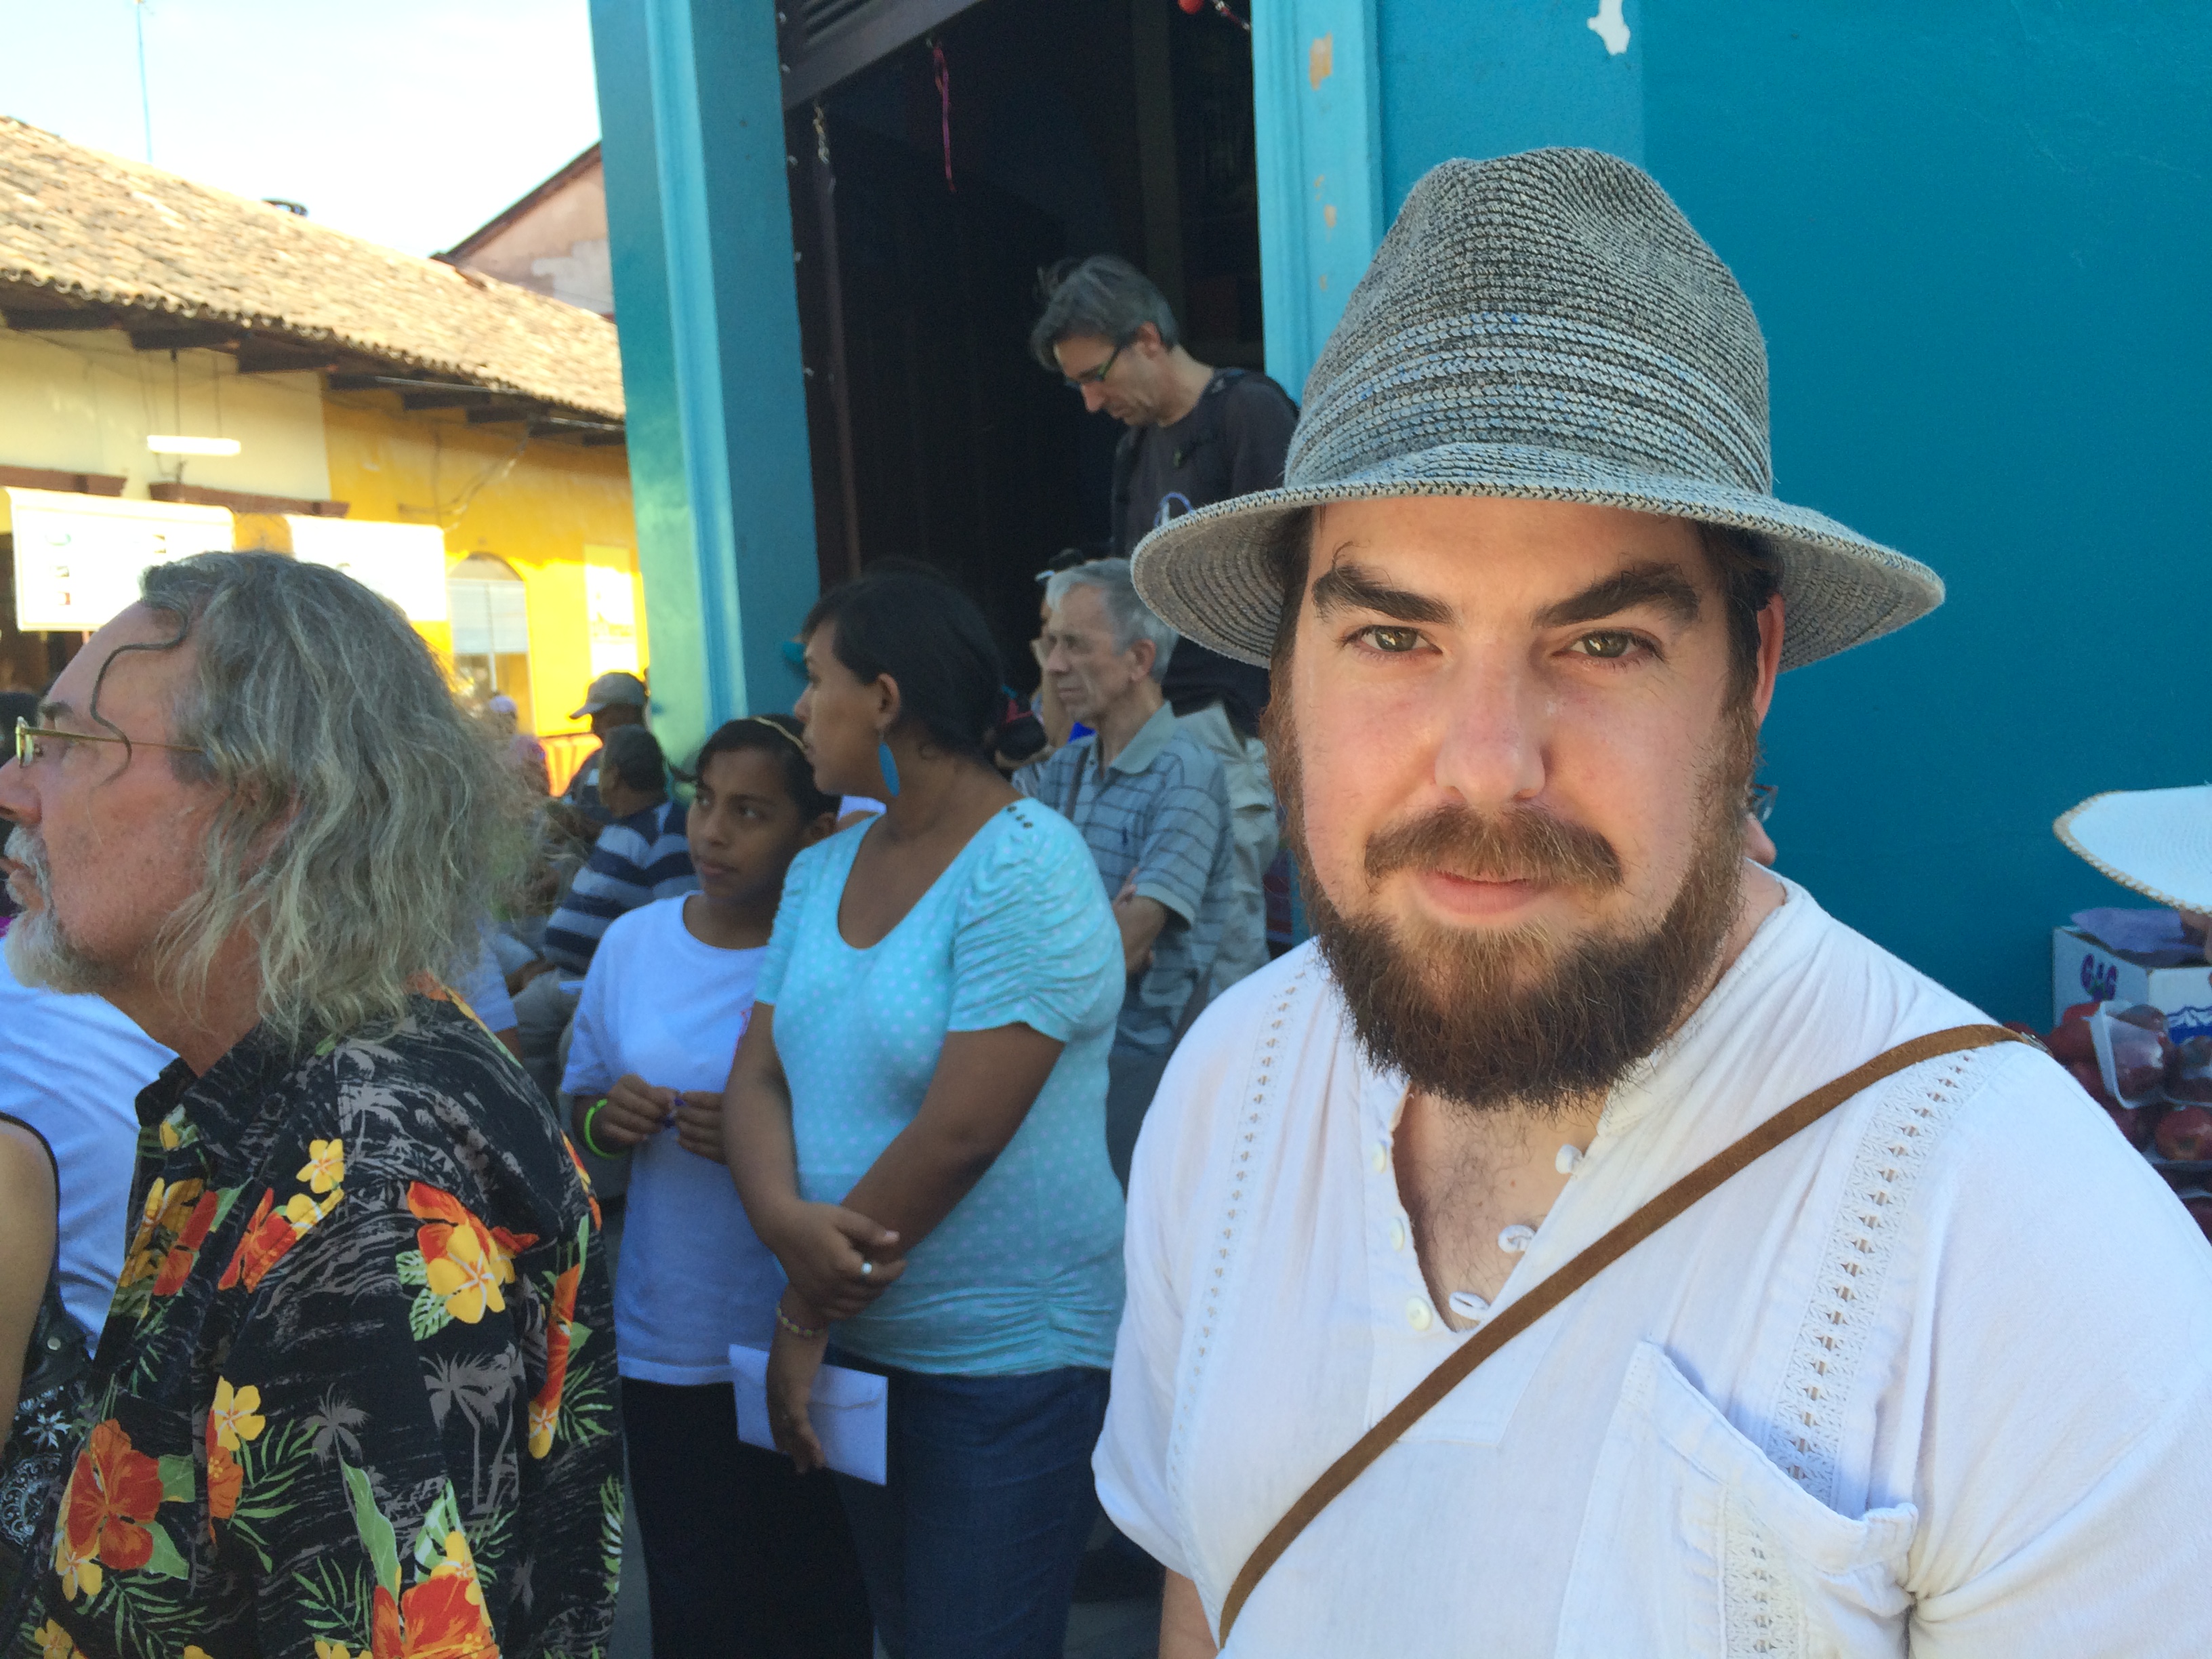 Dylan Brennan at the International Poetry Festival in Granada, Nicaragua